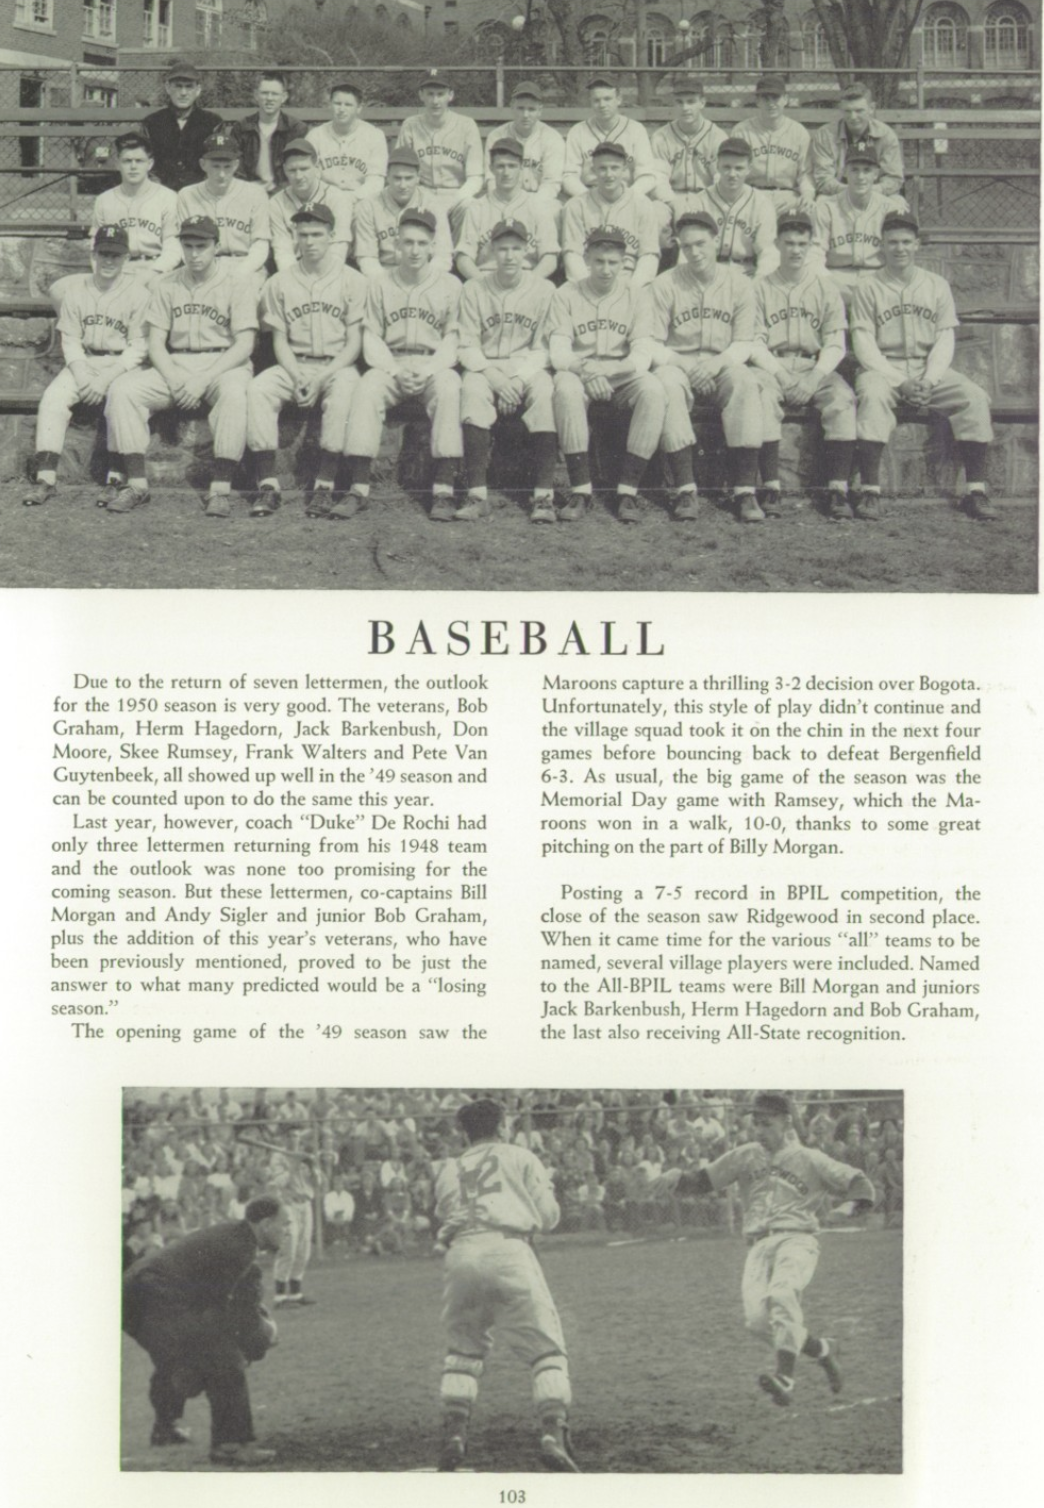 1950 Boys’ Baseball Team